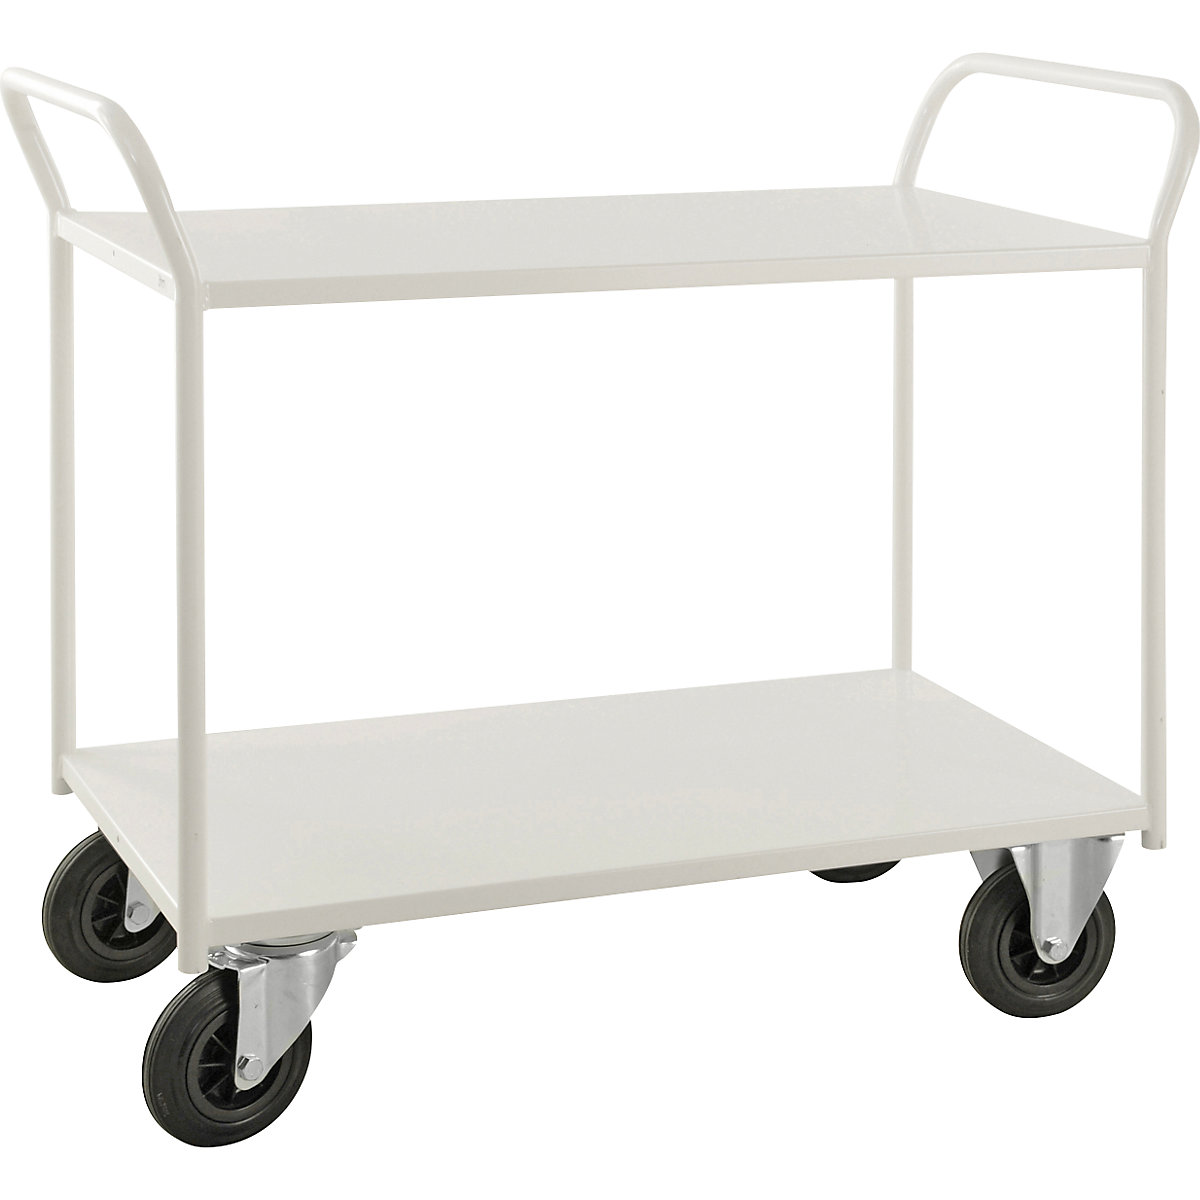 KM41 table trolley – Kongamek, 2 shelves, LxWxH 1070 x 550 x 1000 mm, white, 2 swivel castors and 2 fixed castors, 5+ items-3